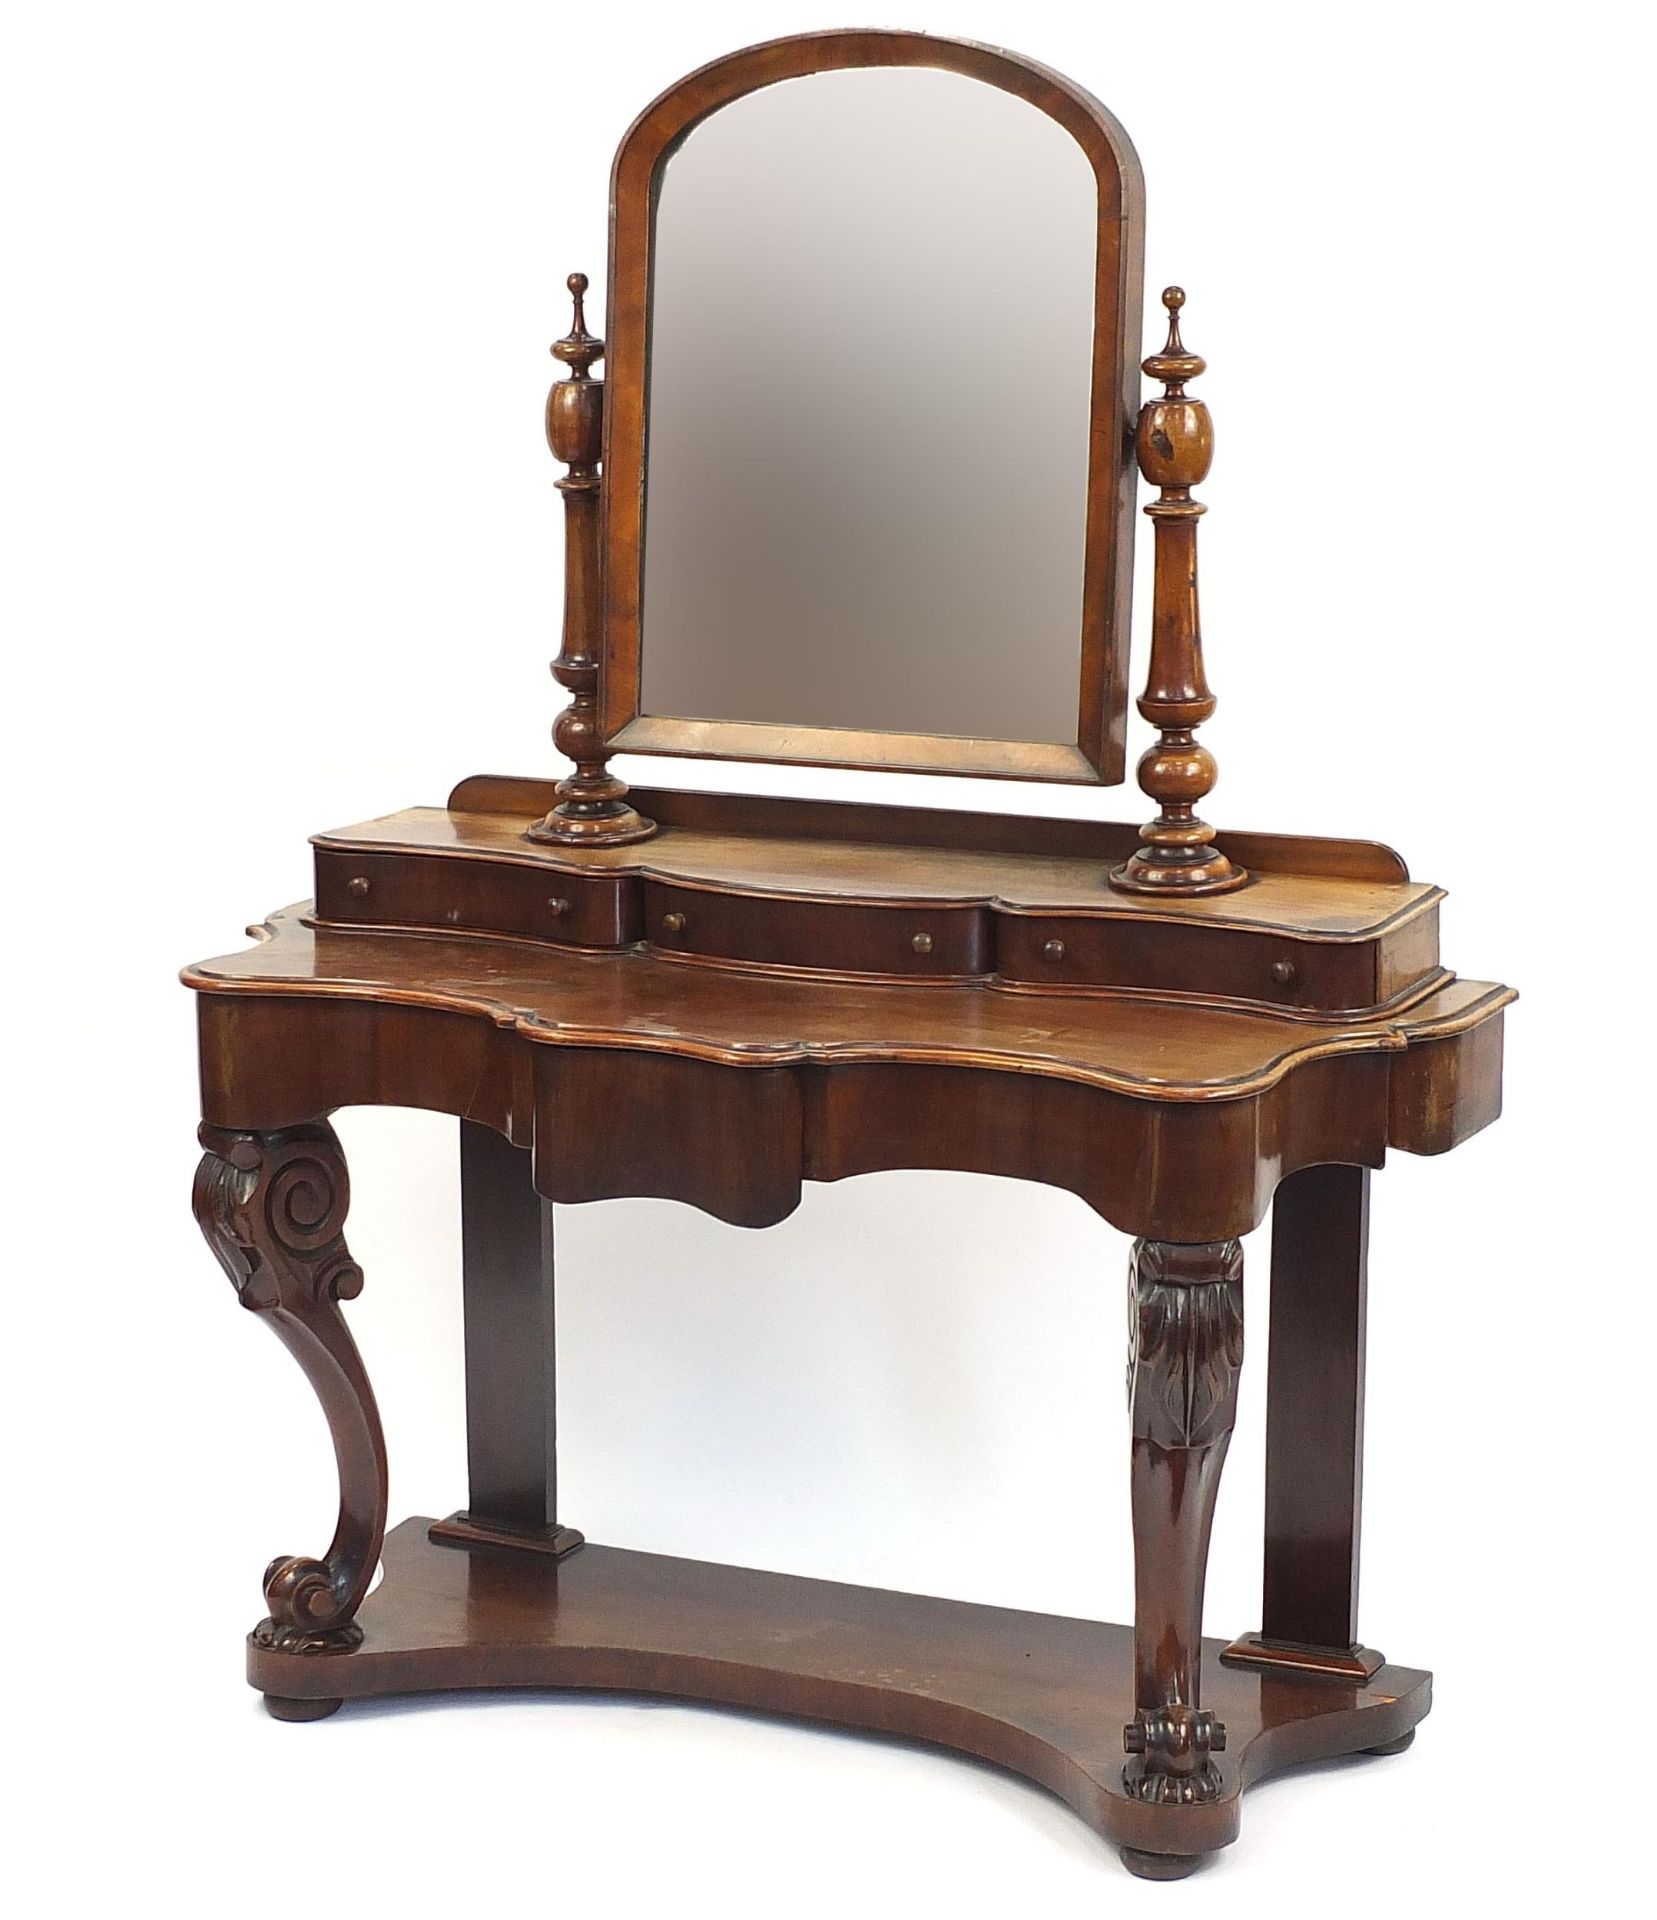 Victorian mahogany Duchess dressing table with swing mirror, 155cm H x 120cm W x 53cm D